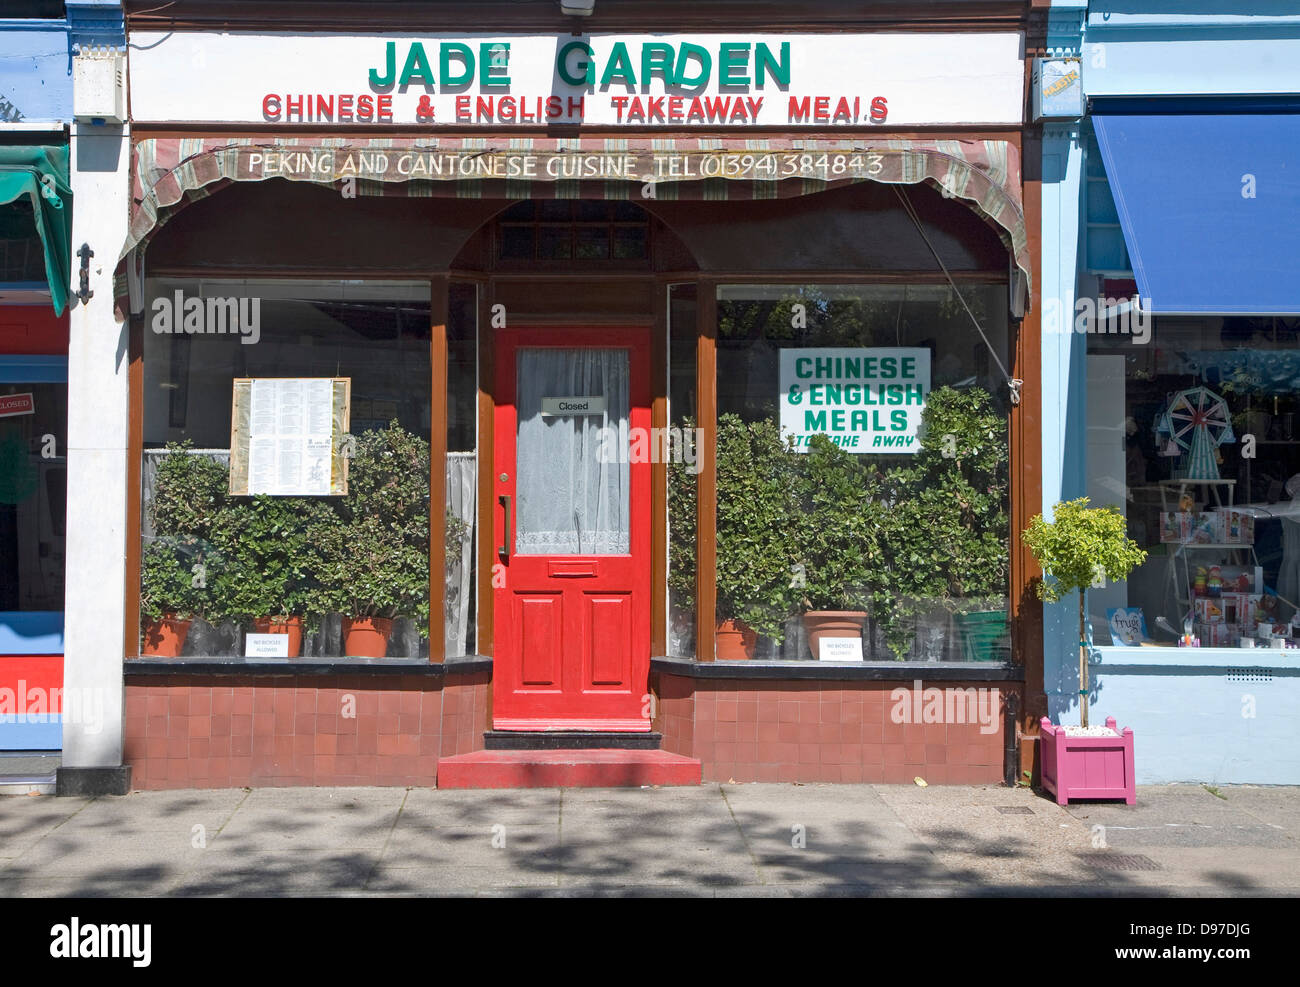 Jade Garden Chinese and English takeaway meals, Woodbridge, Suffolk, England Stock Photo